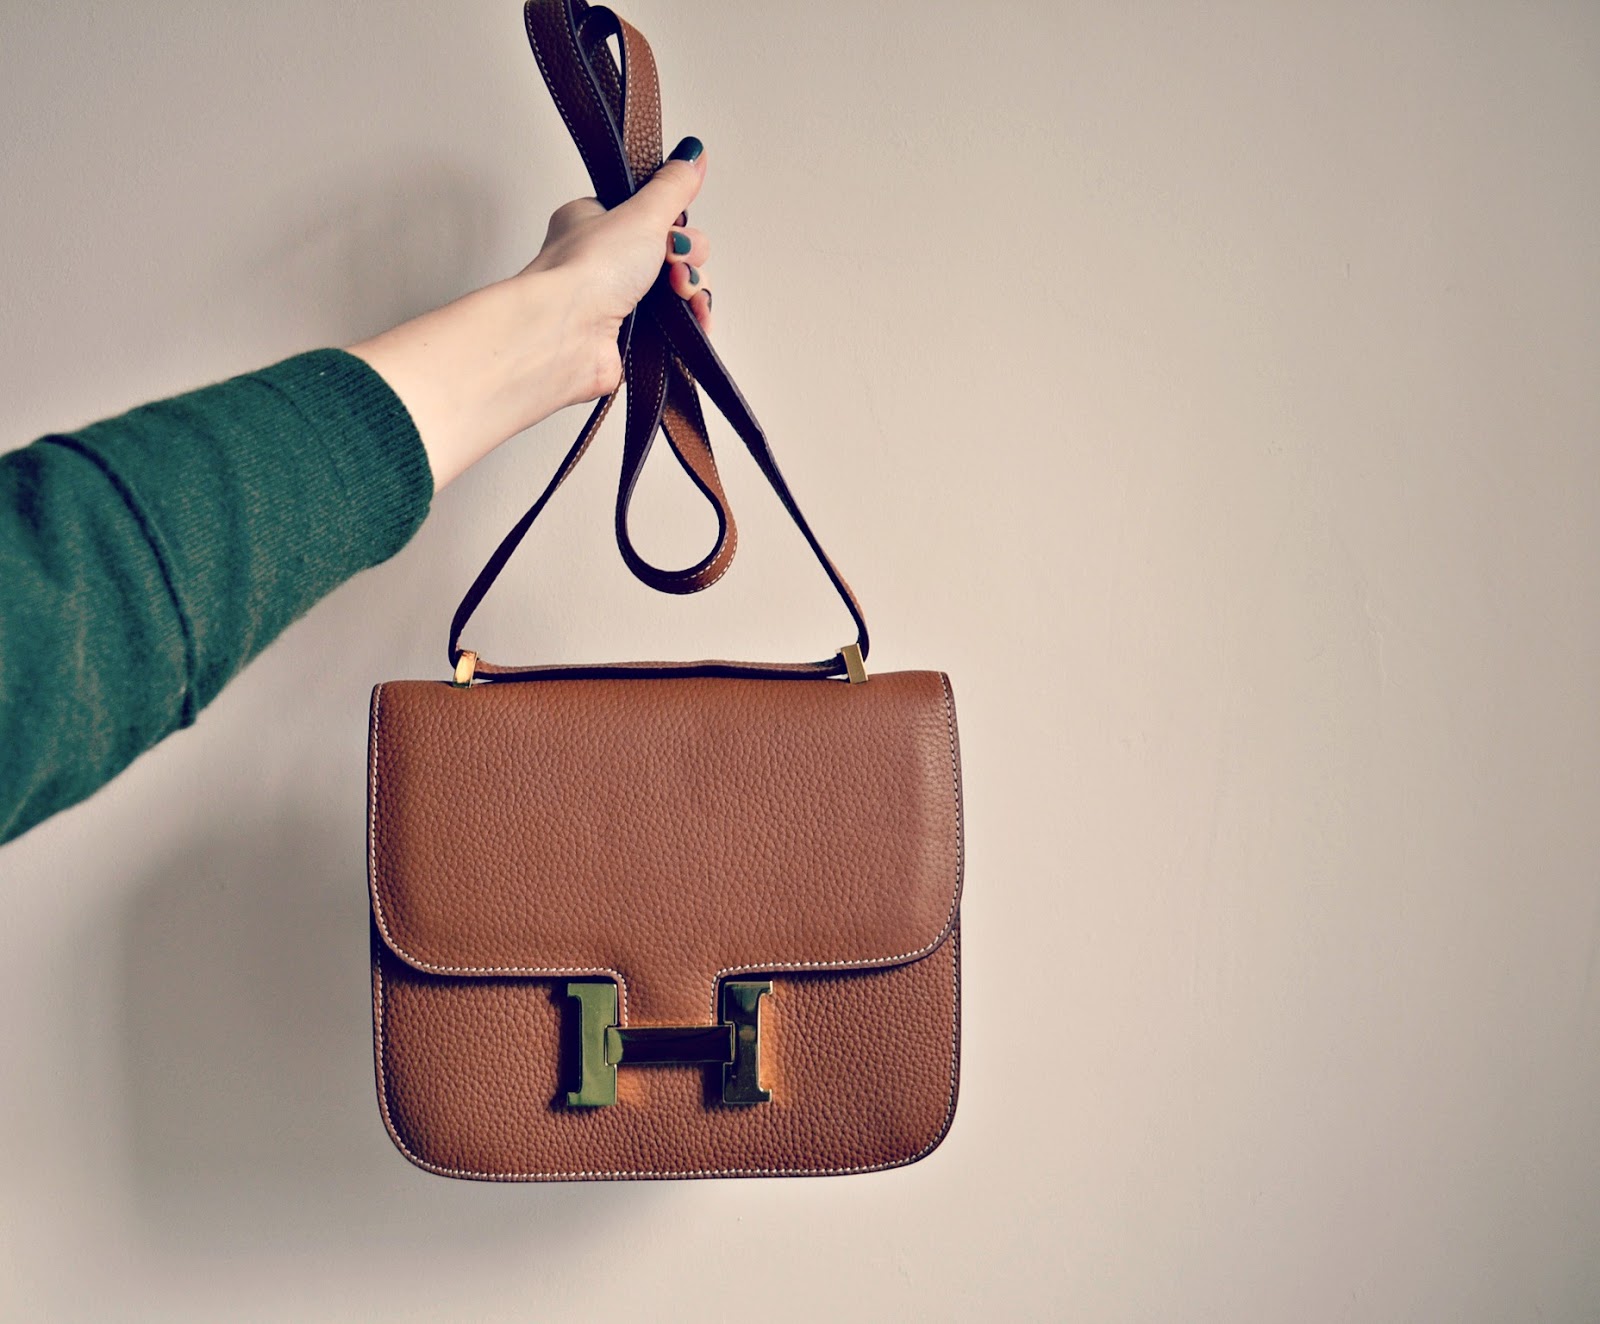 Hermes Constance - a simple handbag | Credit Crunch Chic